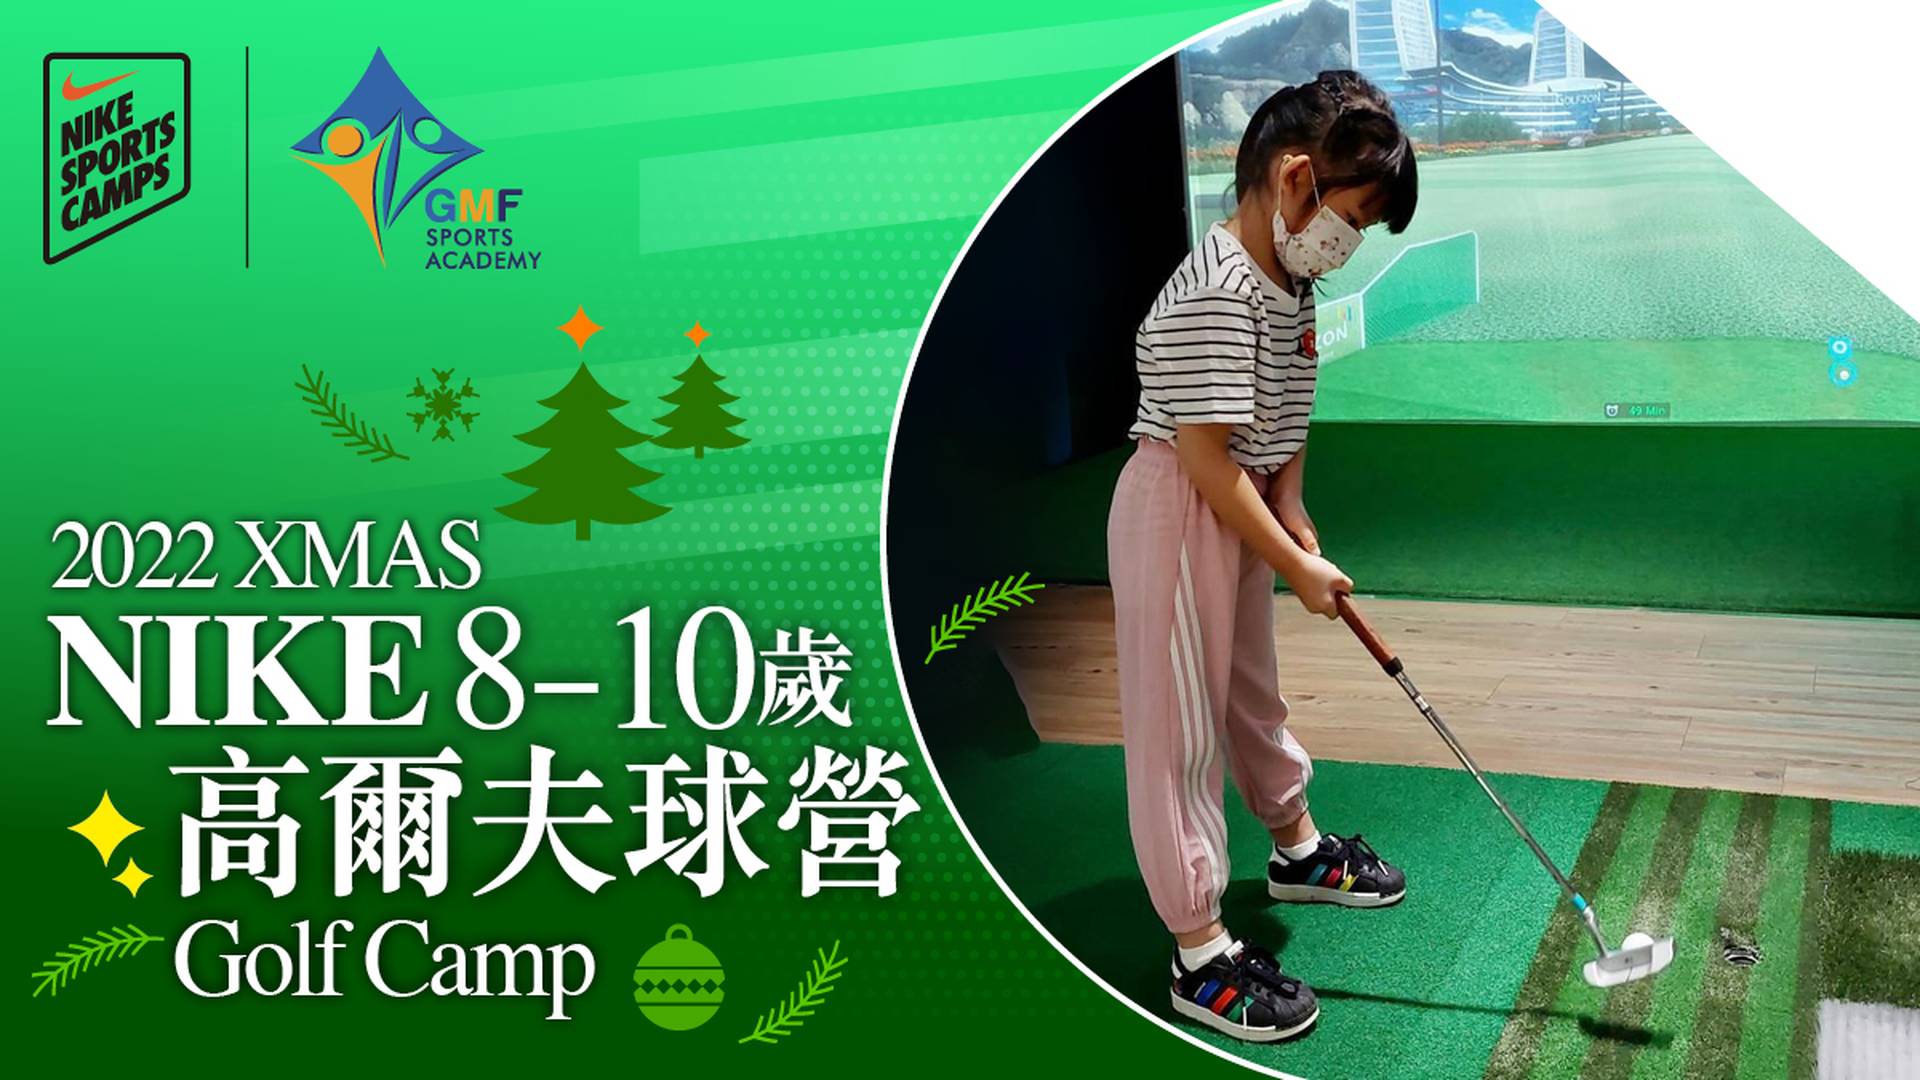 XMAS NIKE Golf Camp聖誕Nike高爾夫球營 2022 (8-10歲)